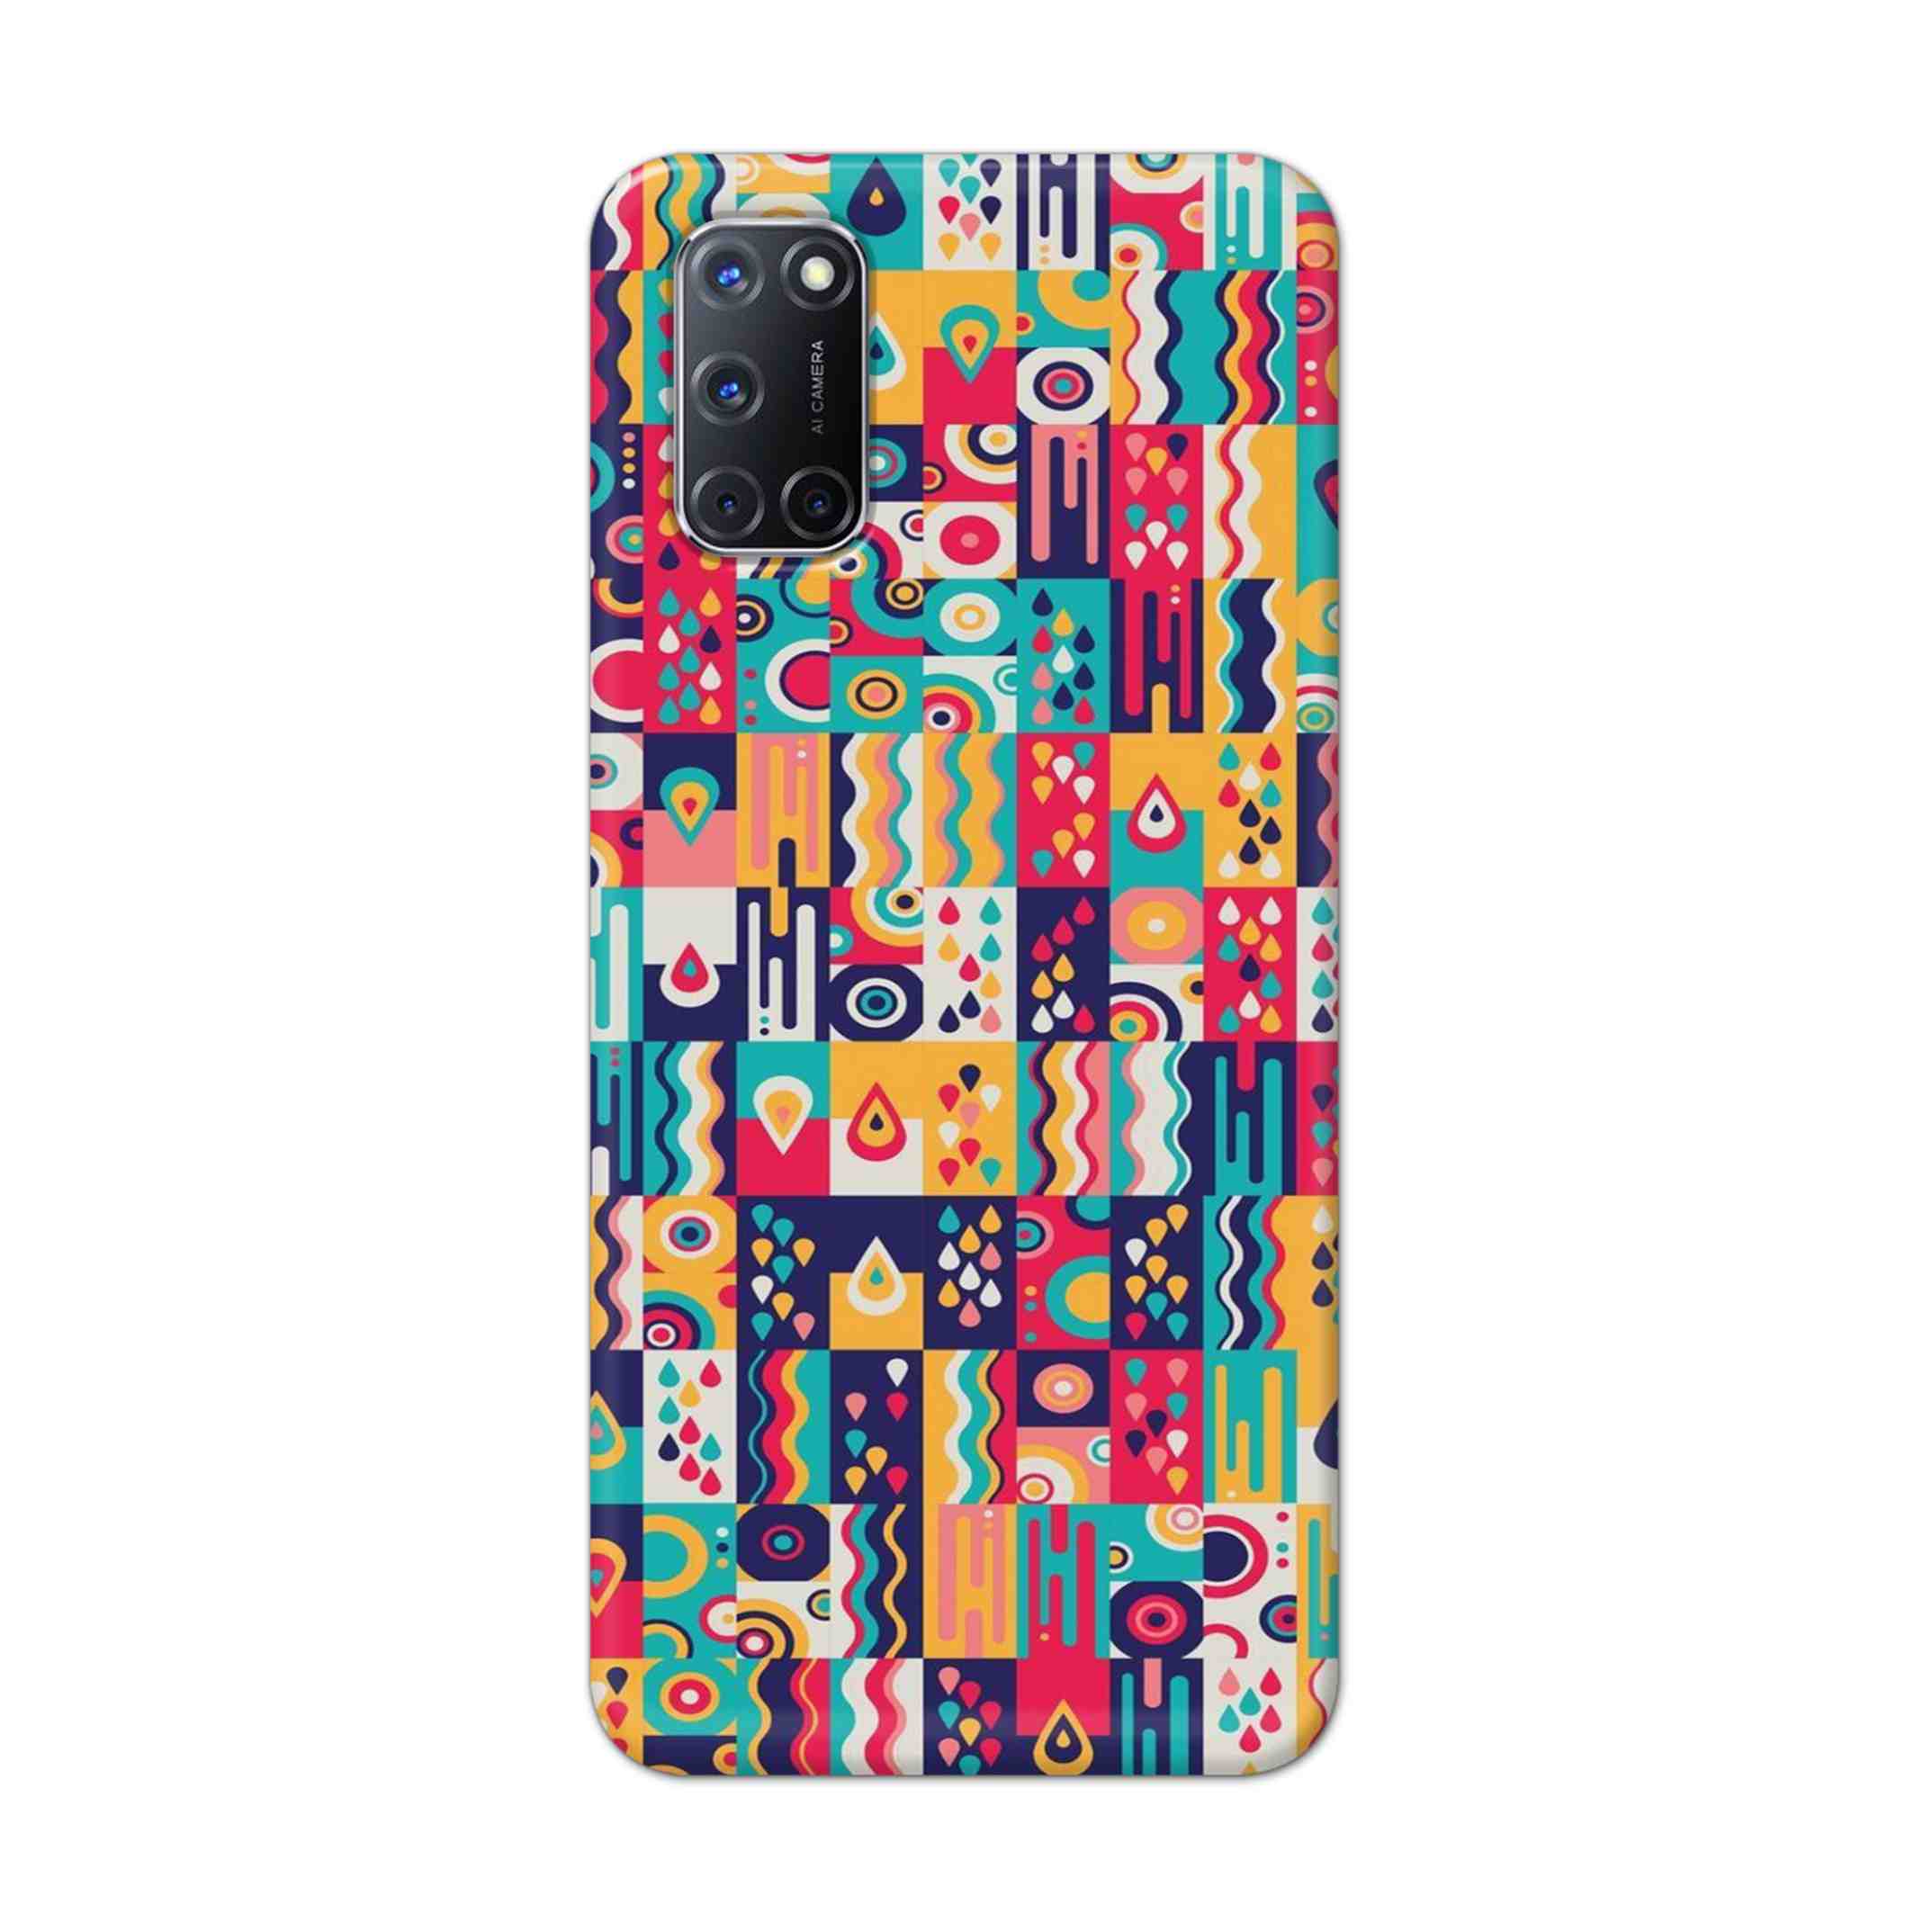 Buy Art Hard Back Mobile Phone Case Cover For Oppo A52 Online